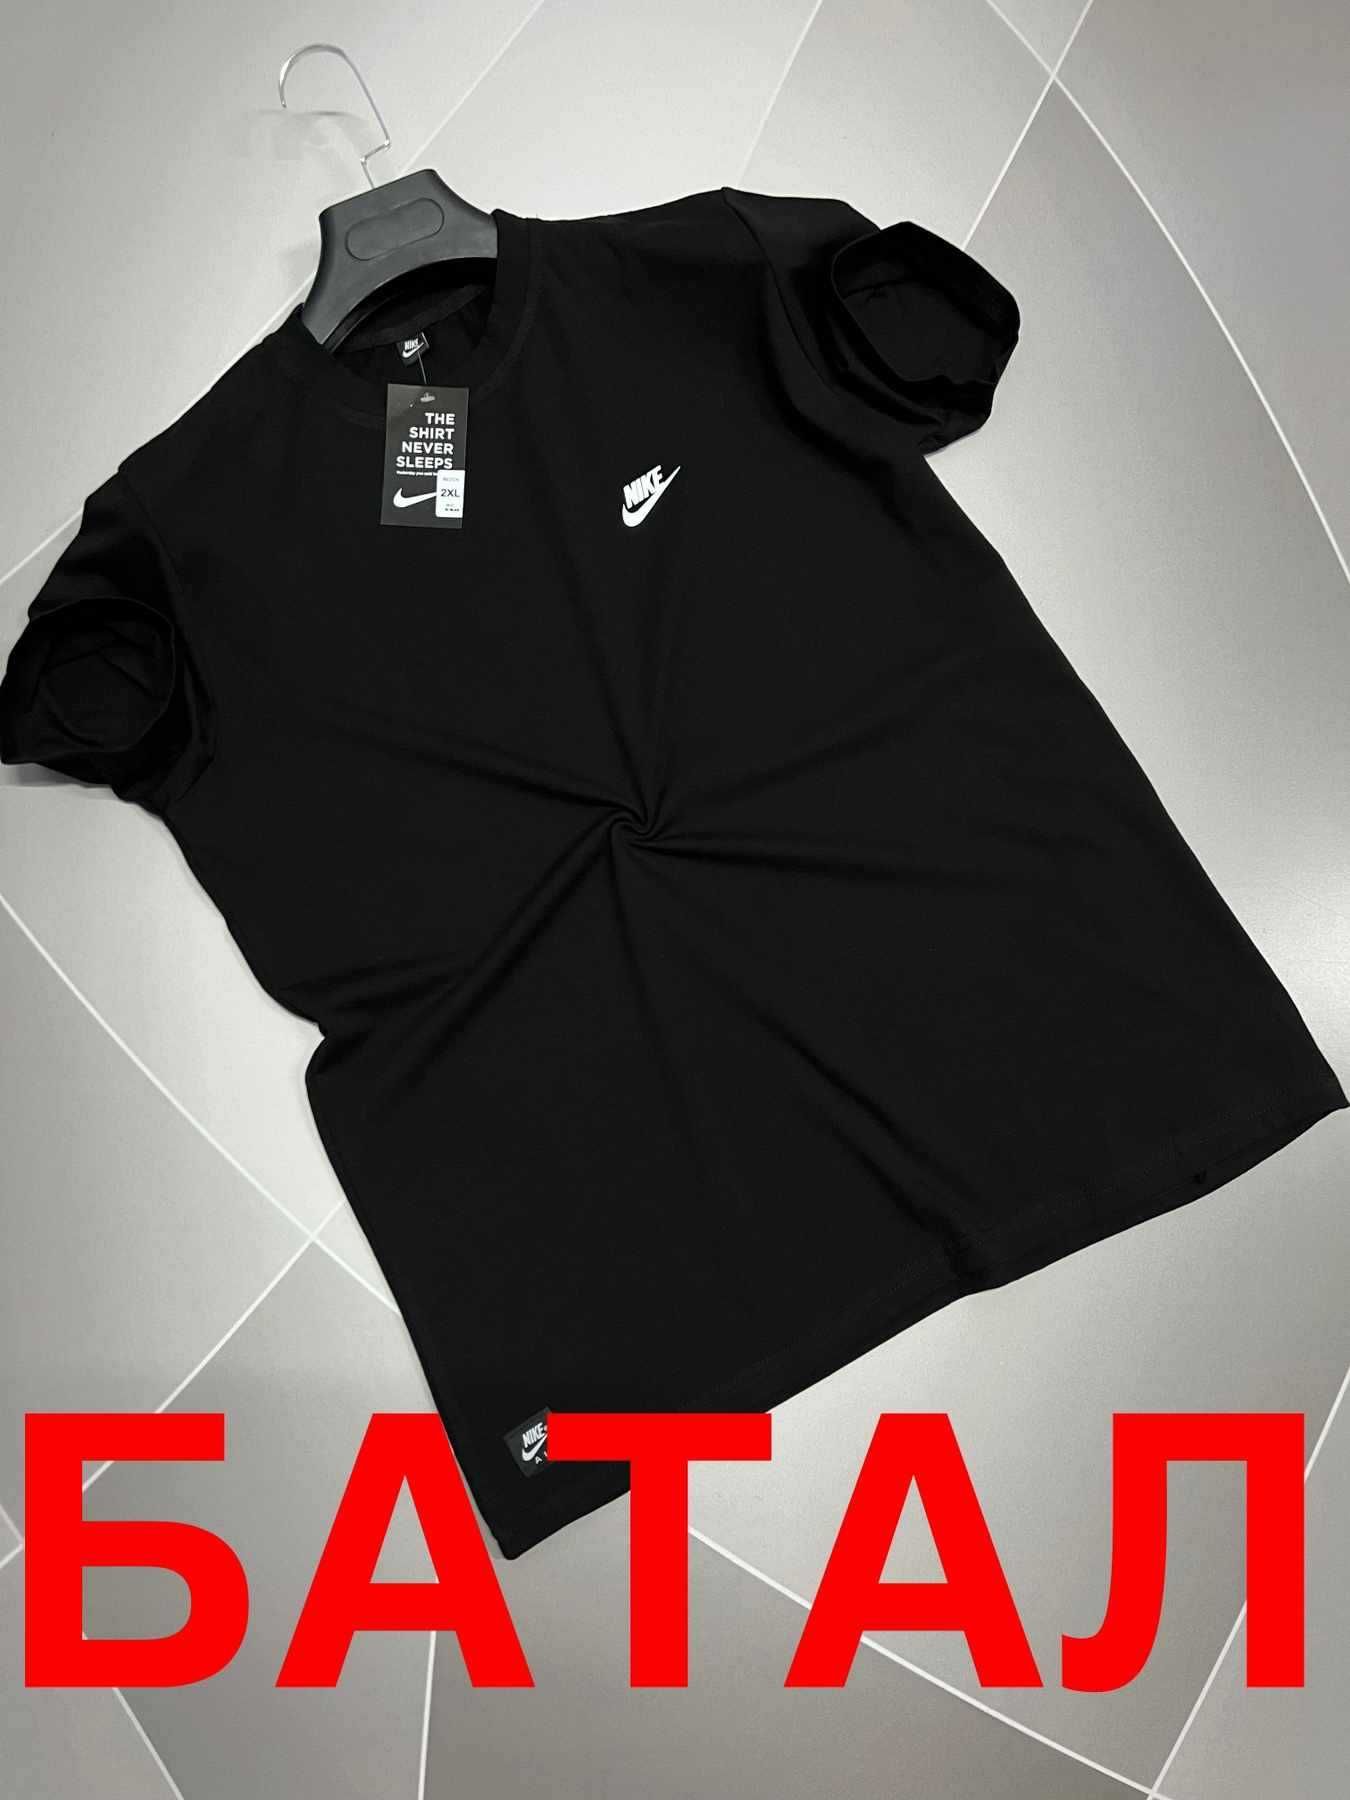 Мужская черная футболка Батал Nike, Under  Турция больших размеров